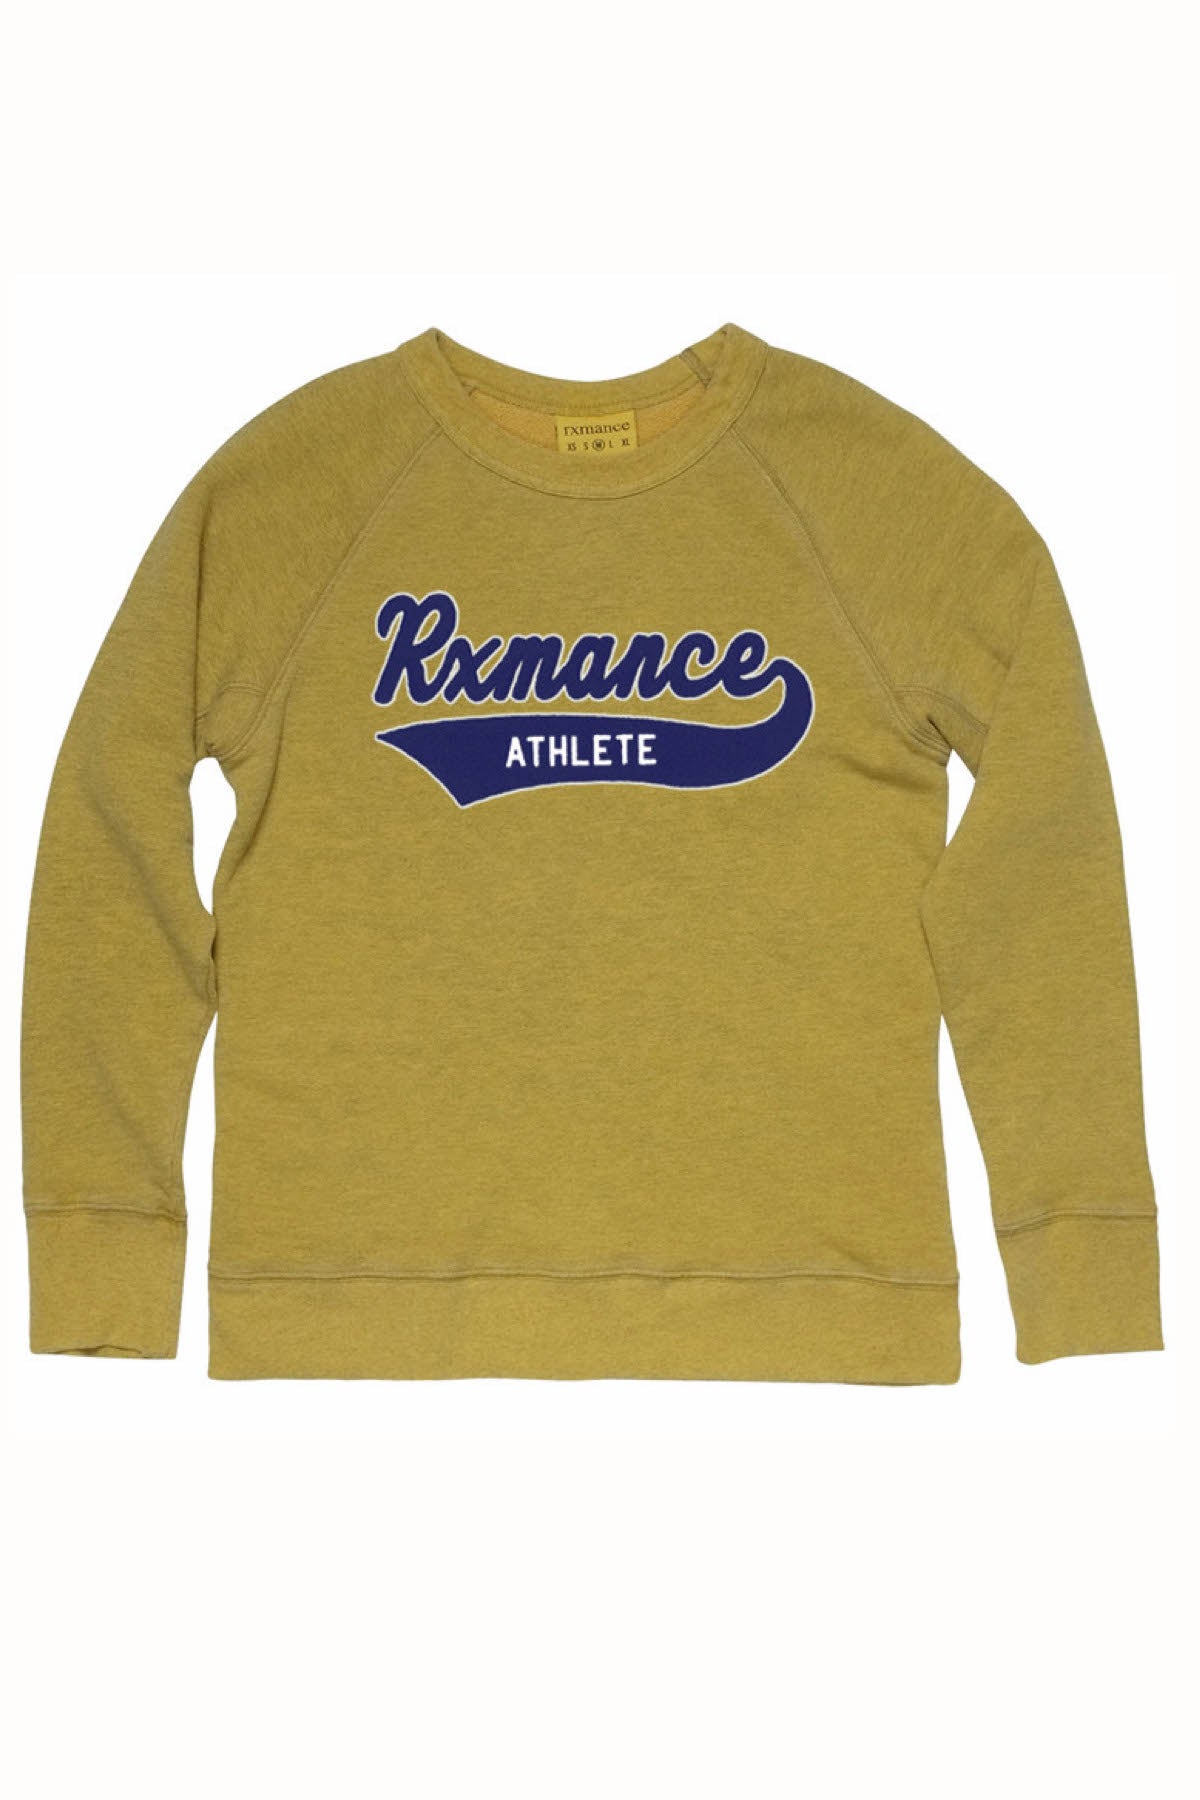 Rxmance Unisex Yellow Script Sweatshirt